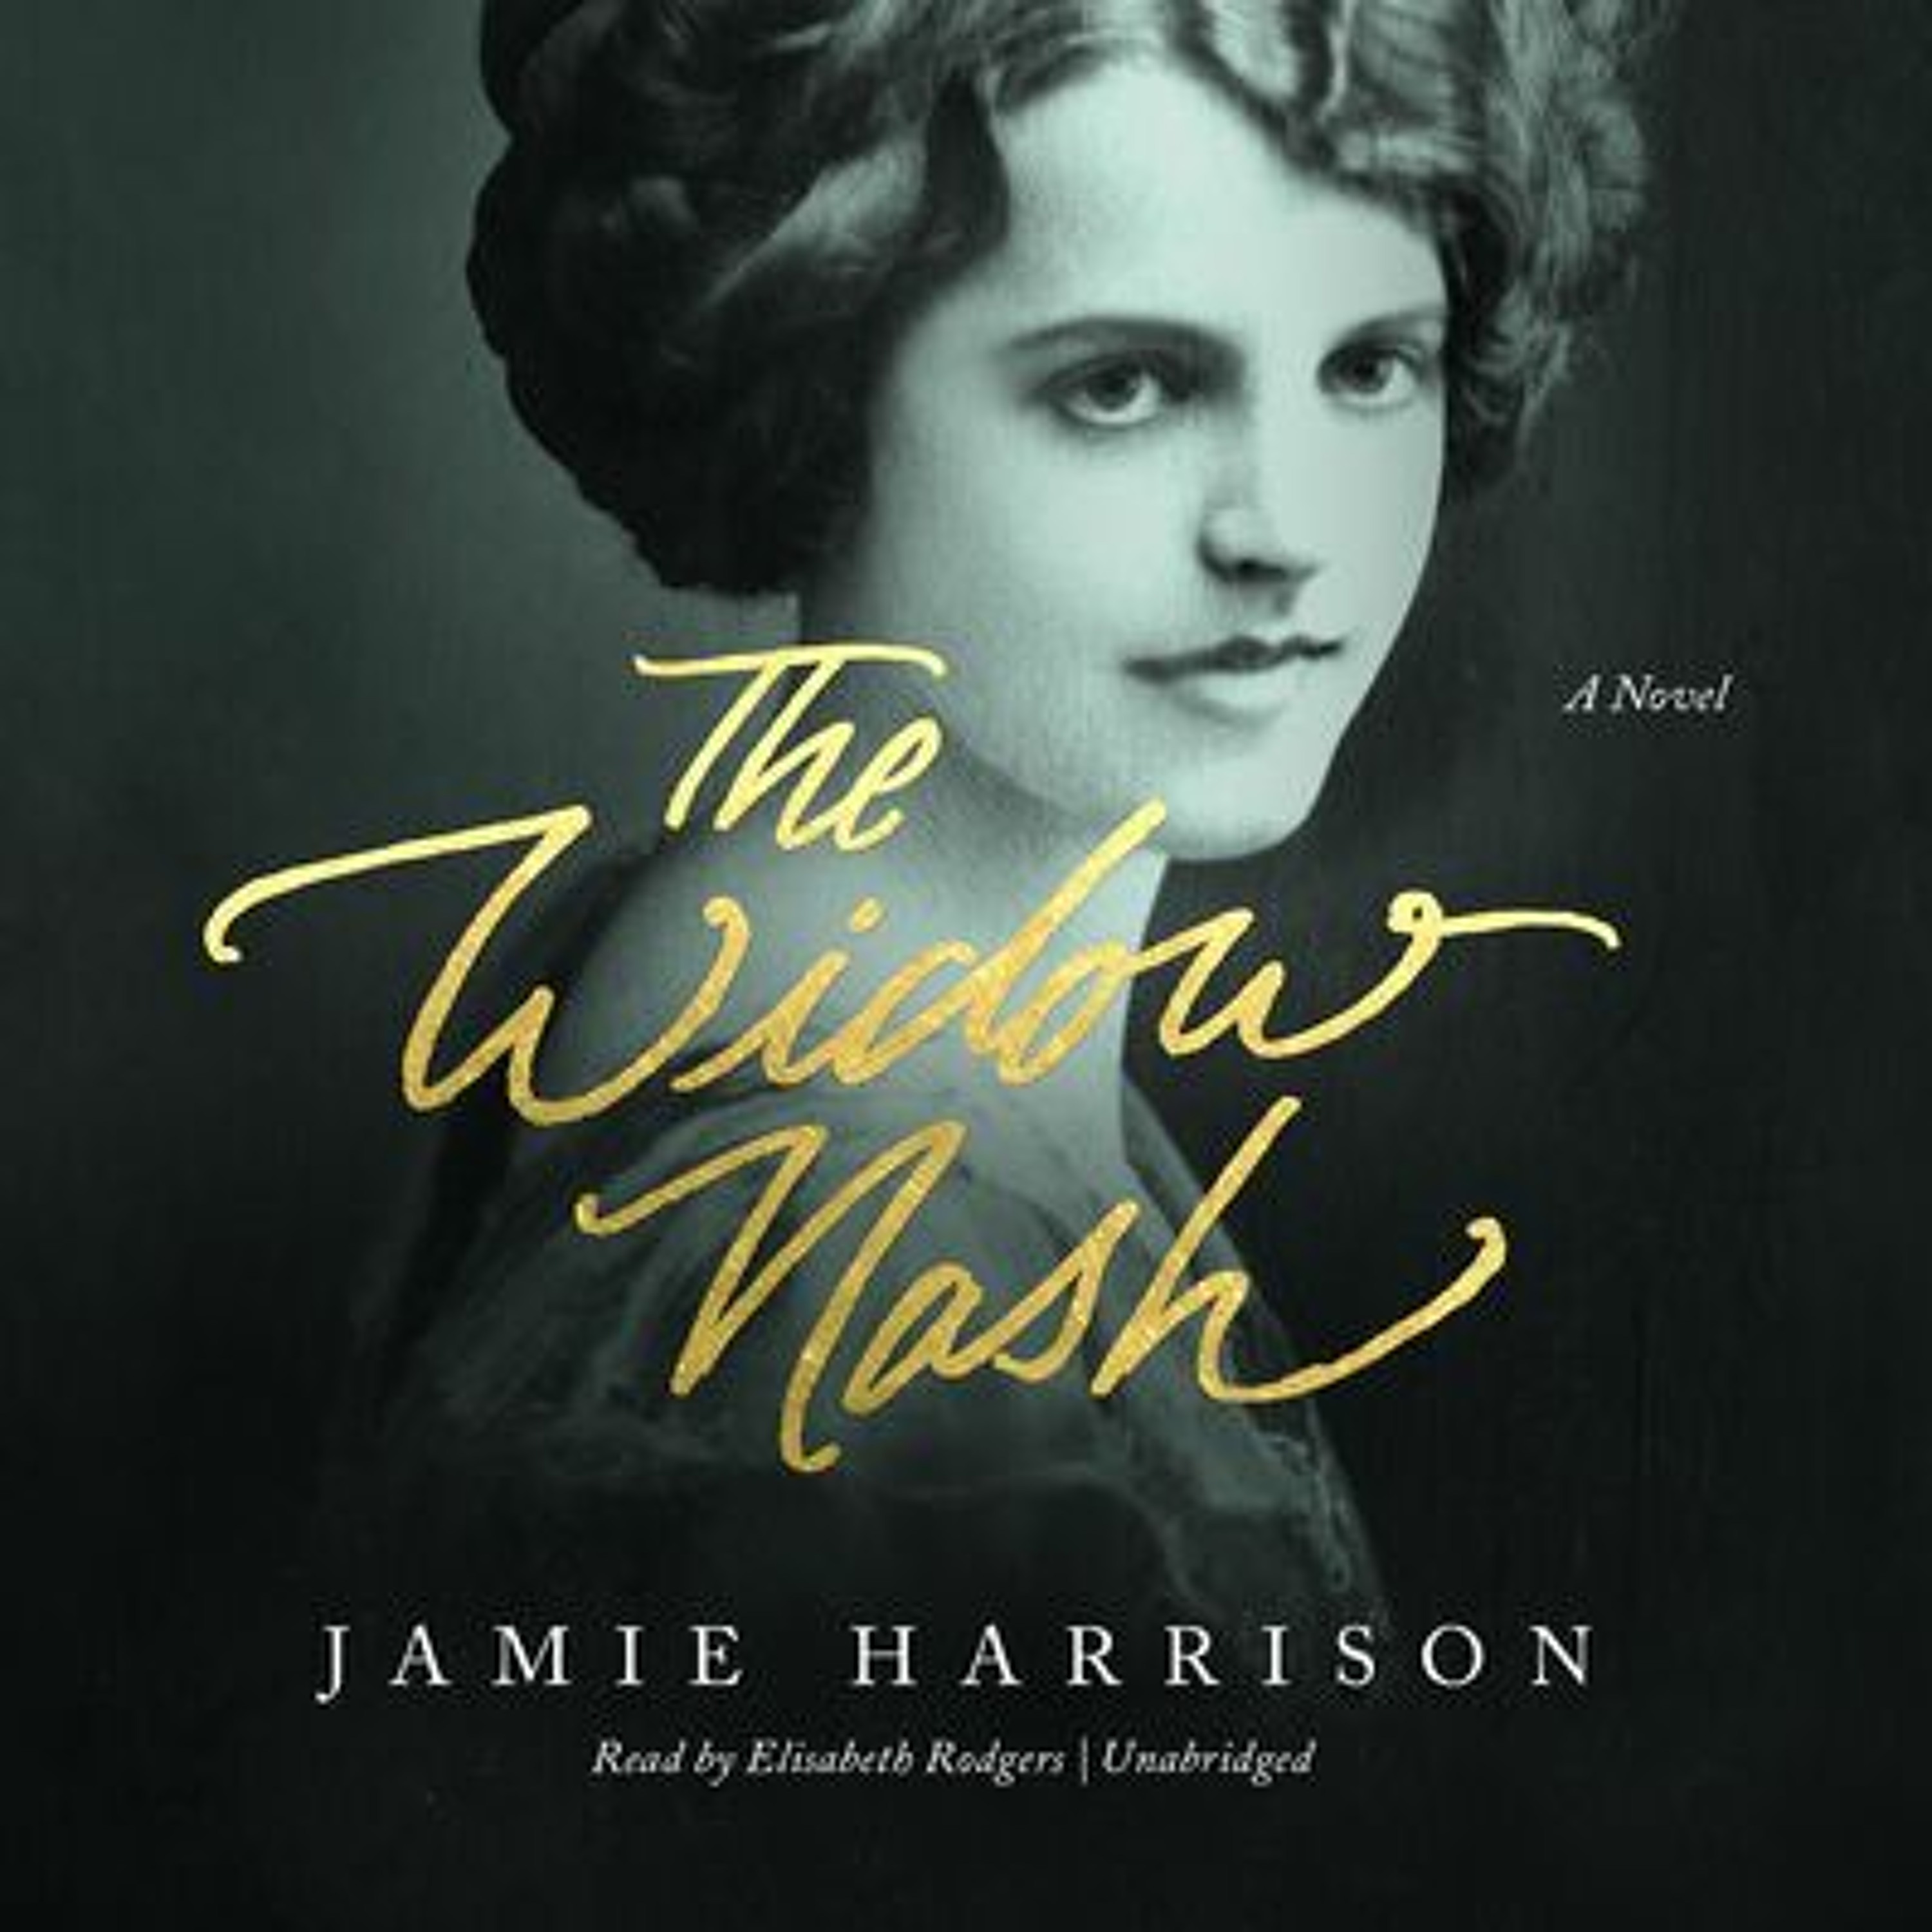 Jamie Harrison on THE WIDOW NASH